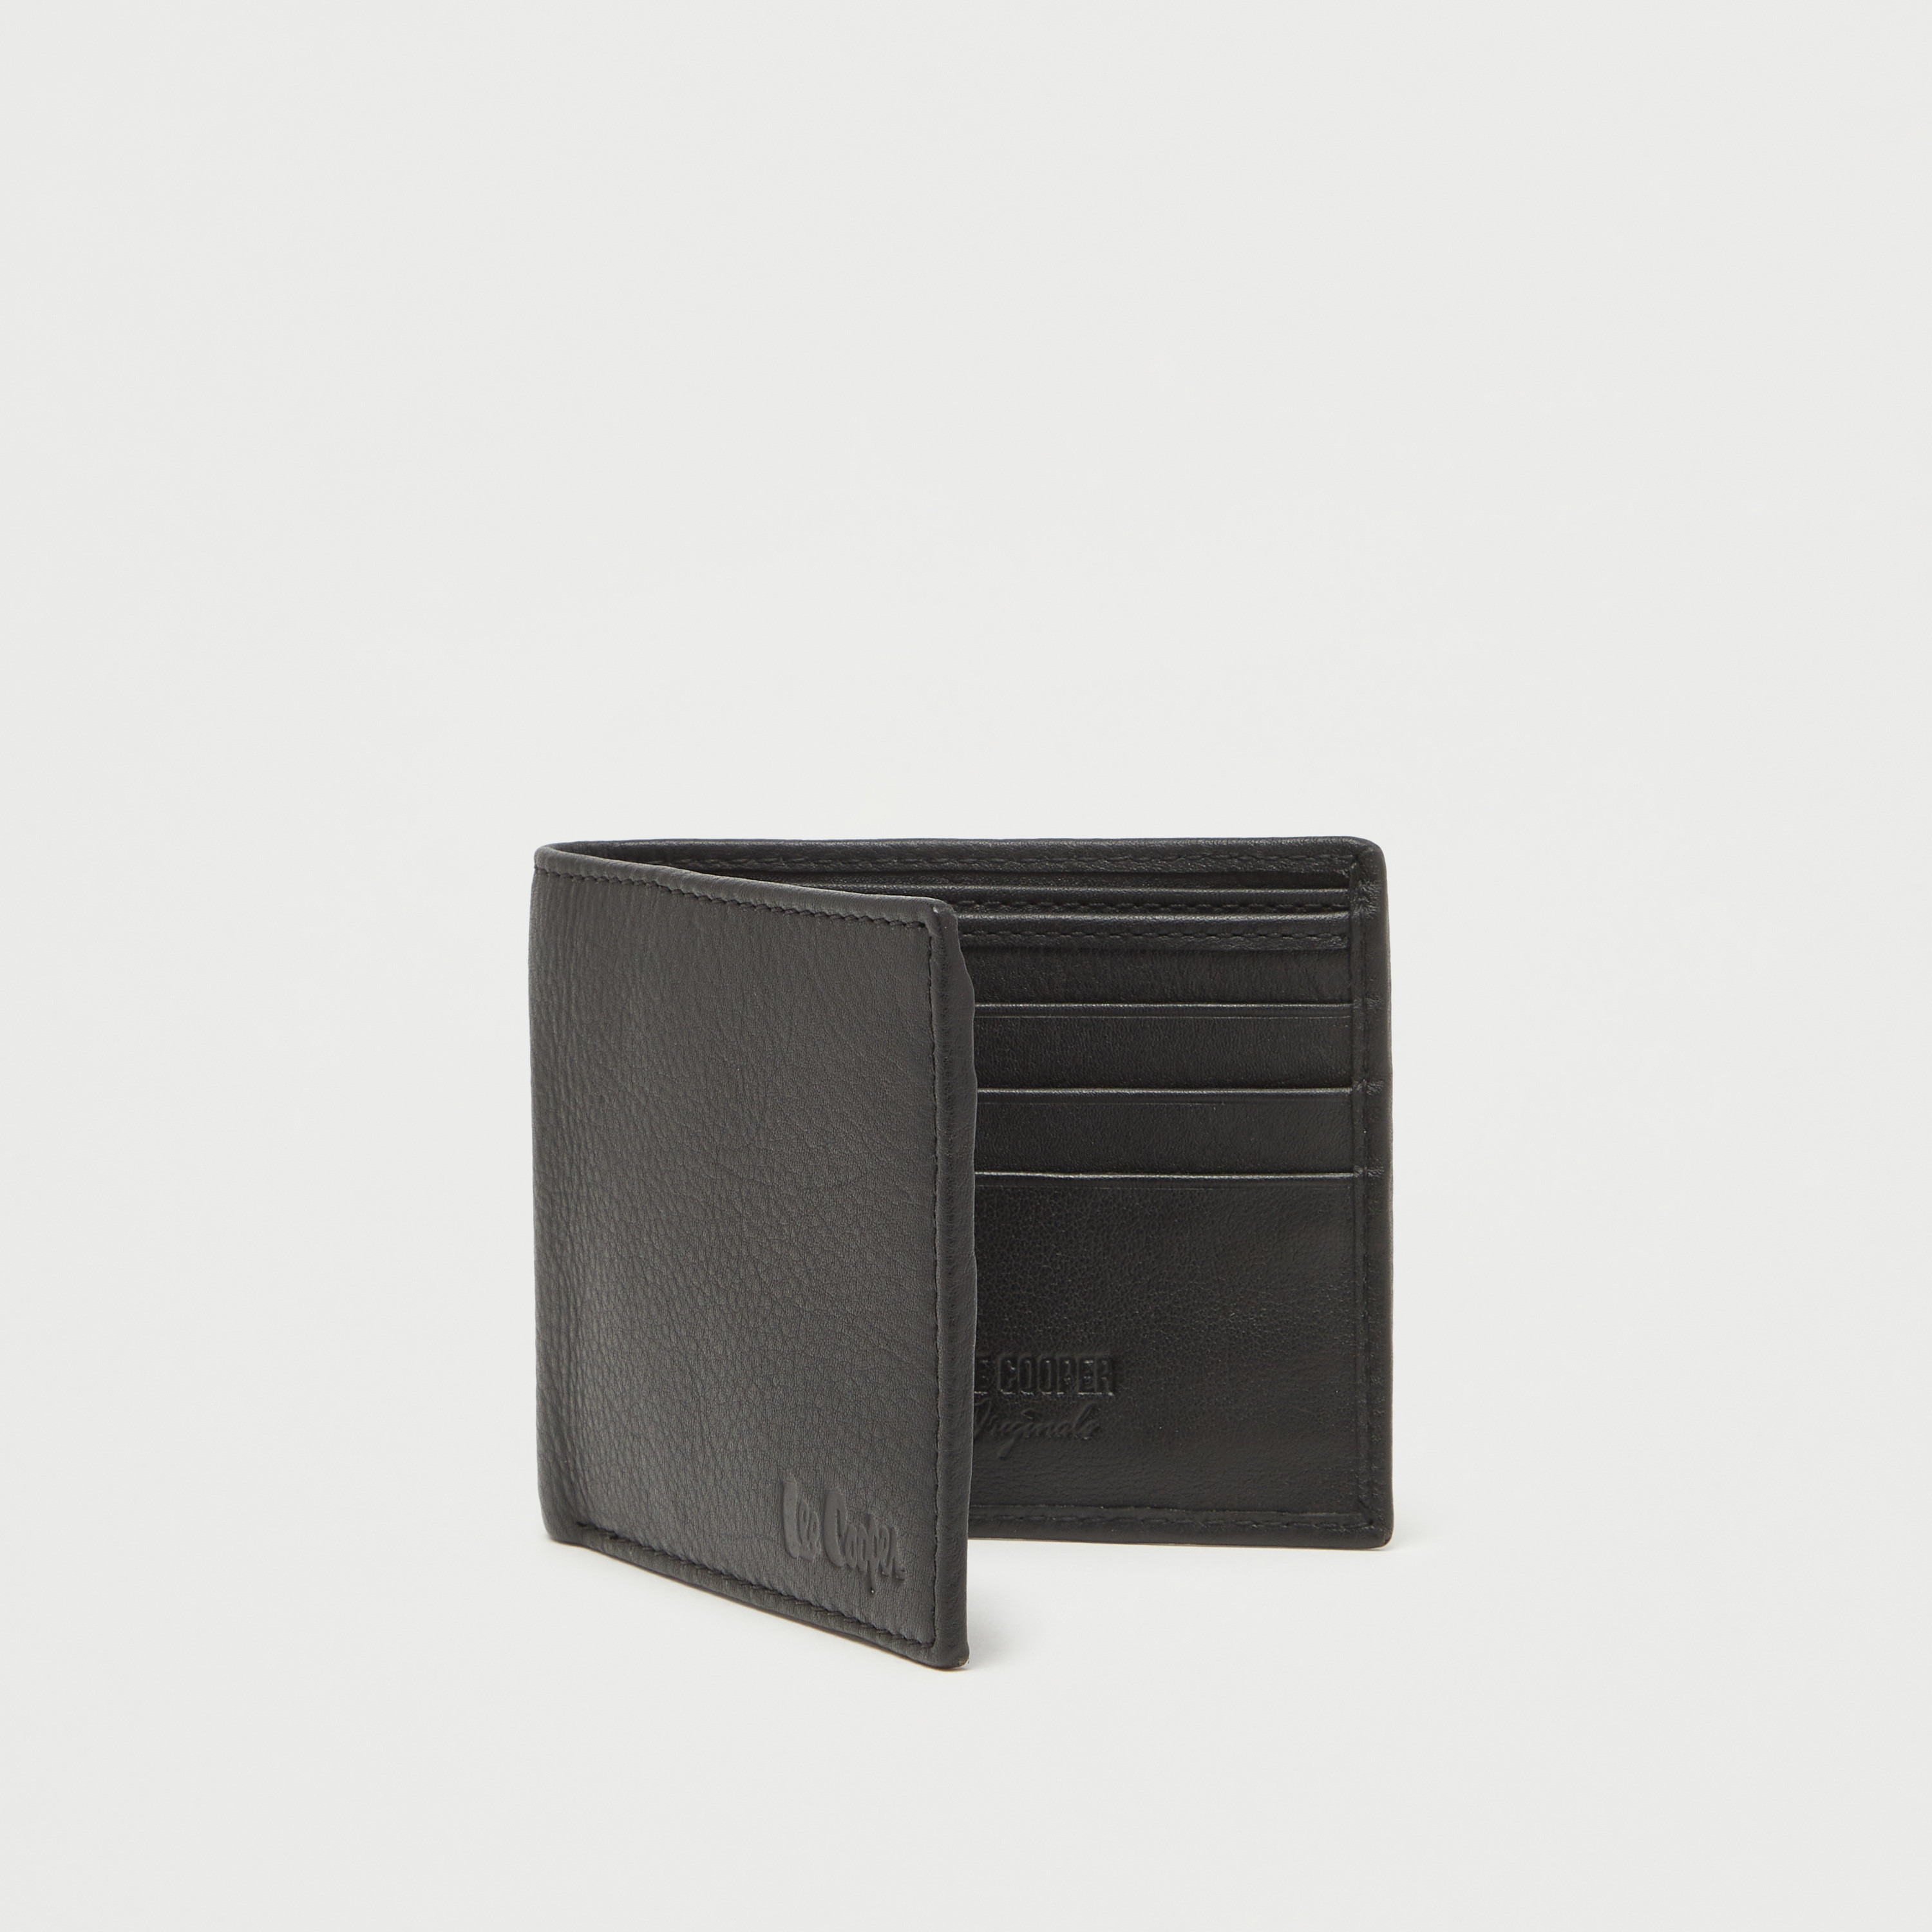 Lee Cooper Genuine Leather Wallet Promotion Price🤗 | Lazada